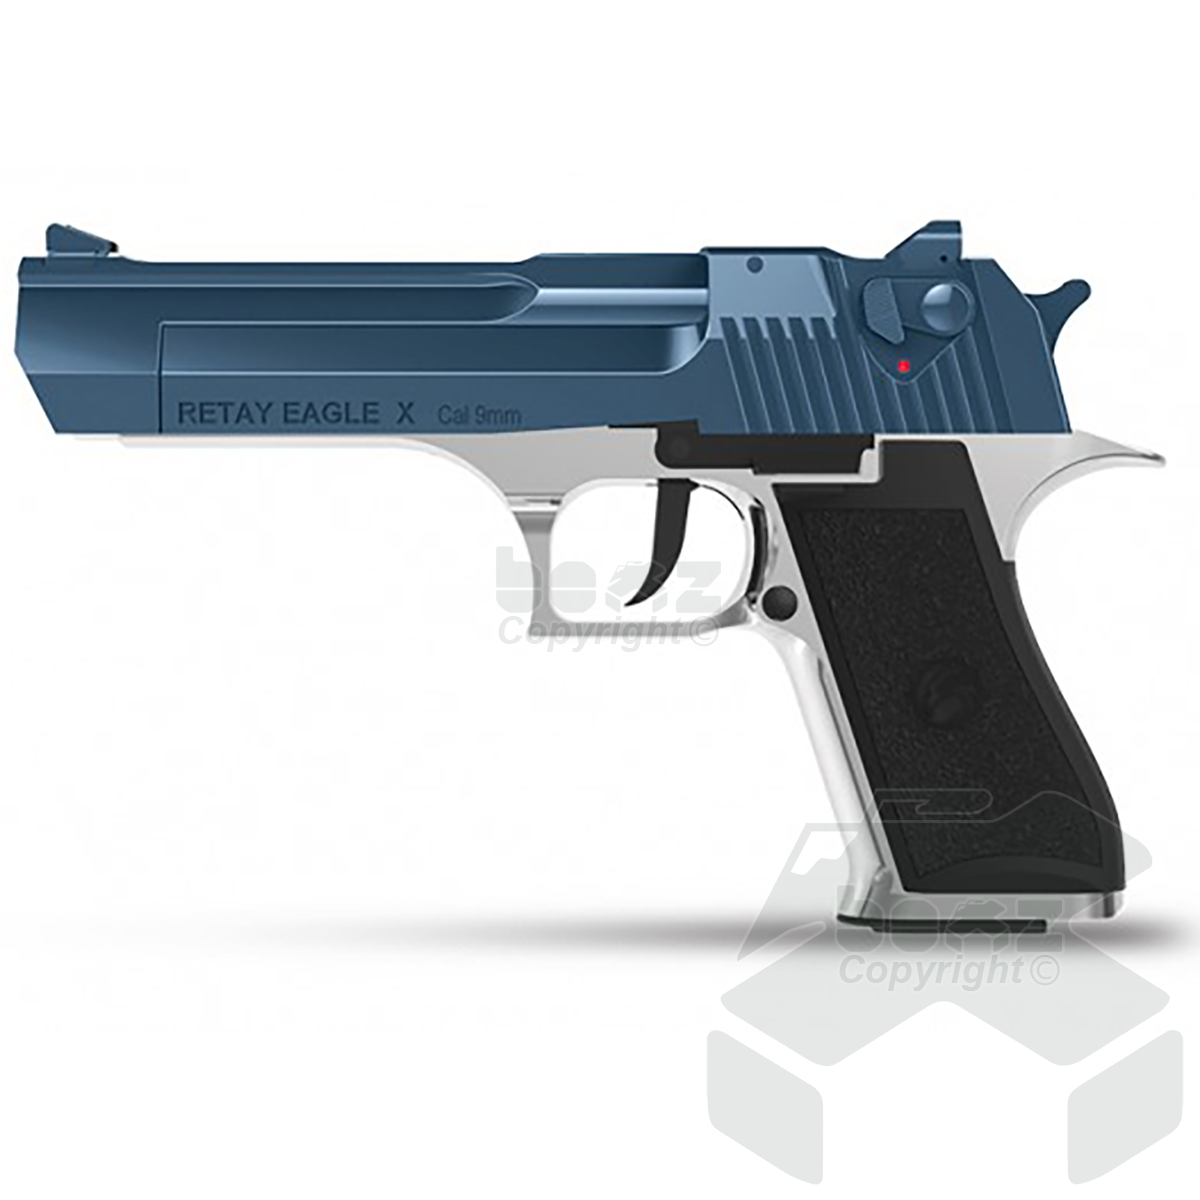 Retay EagleX Blank Firing Pistol - 9mm - Chrome